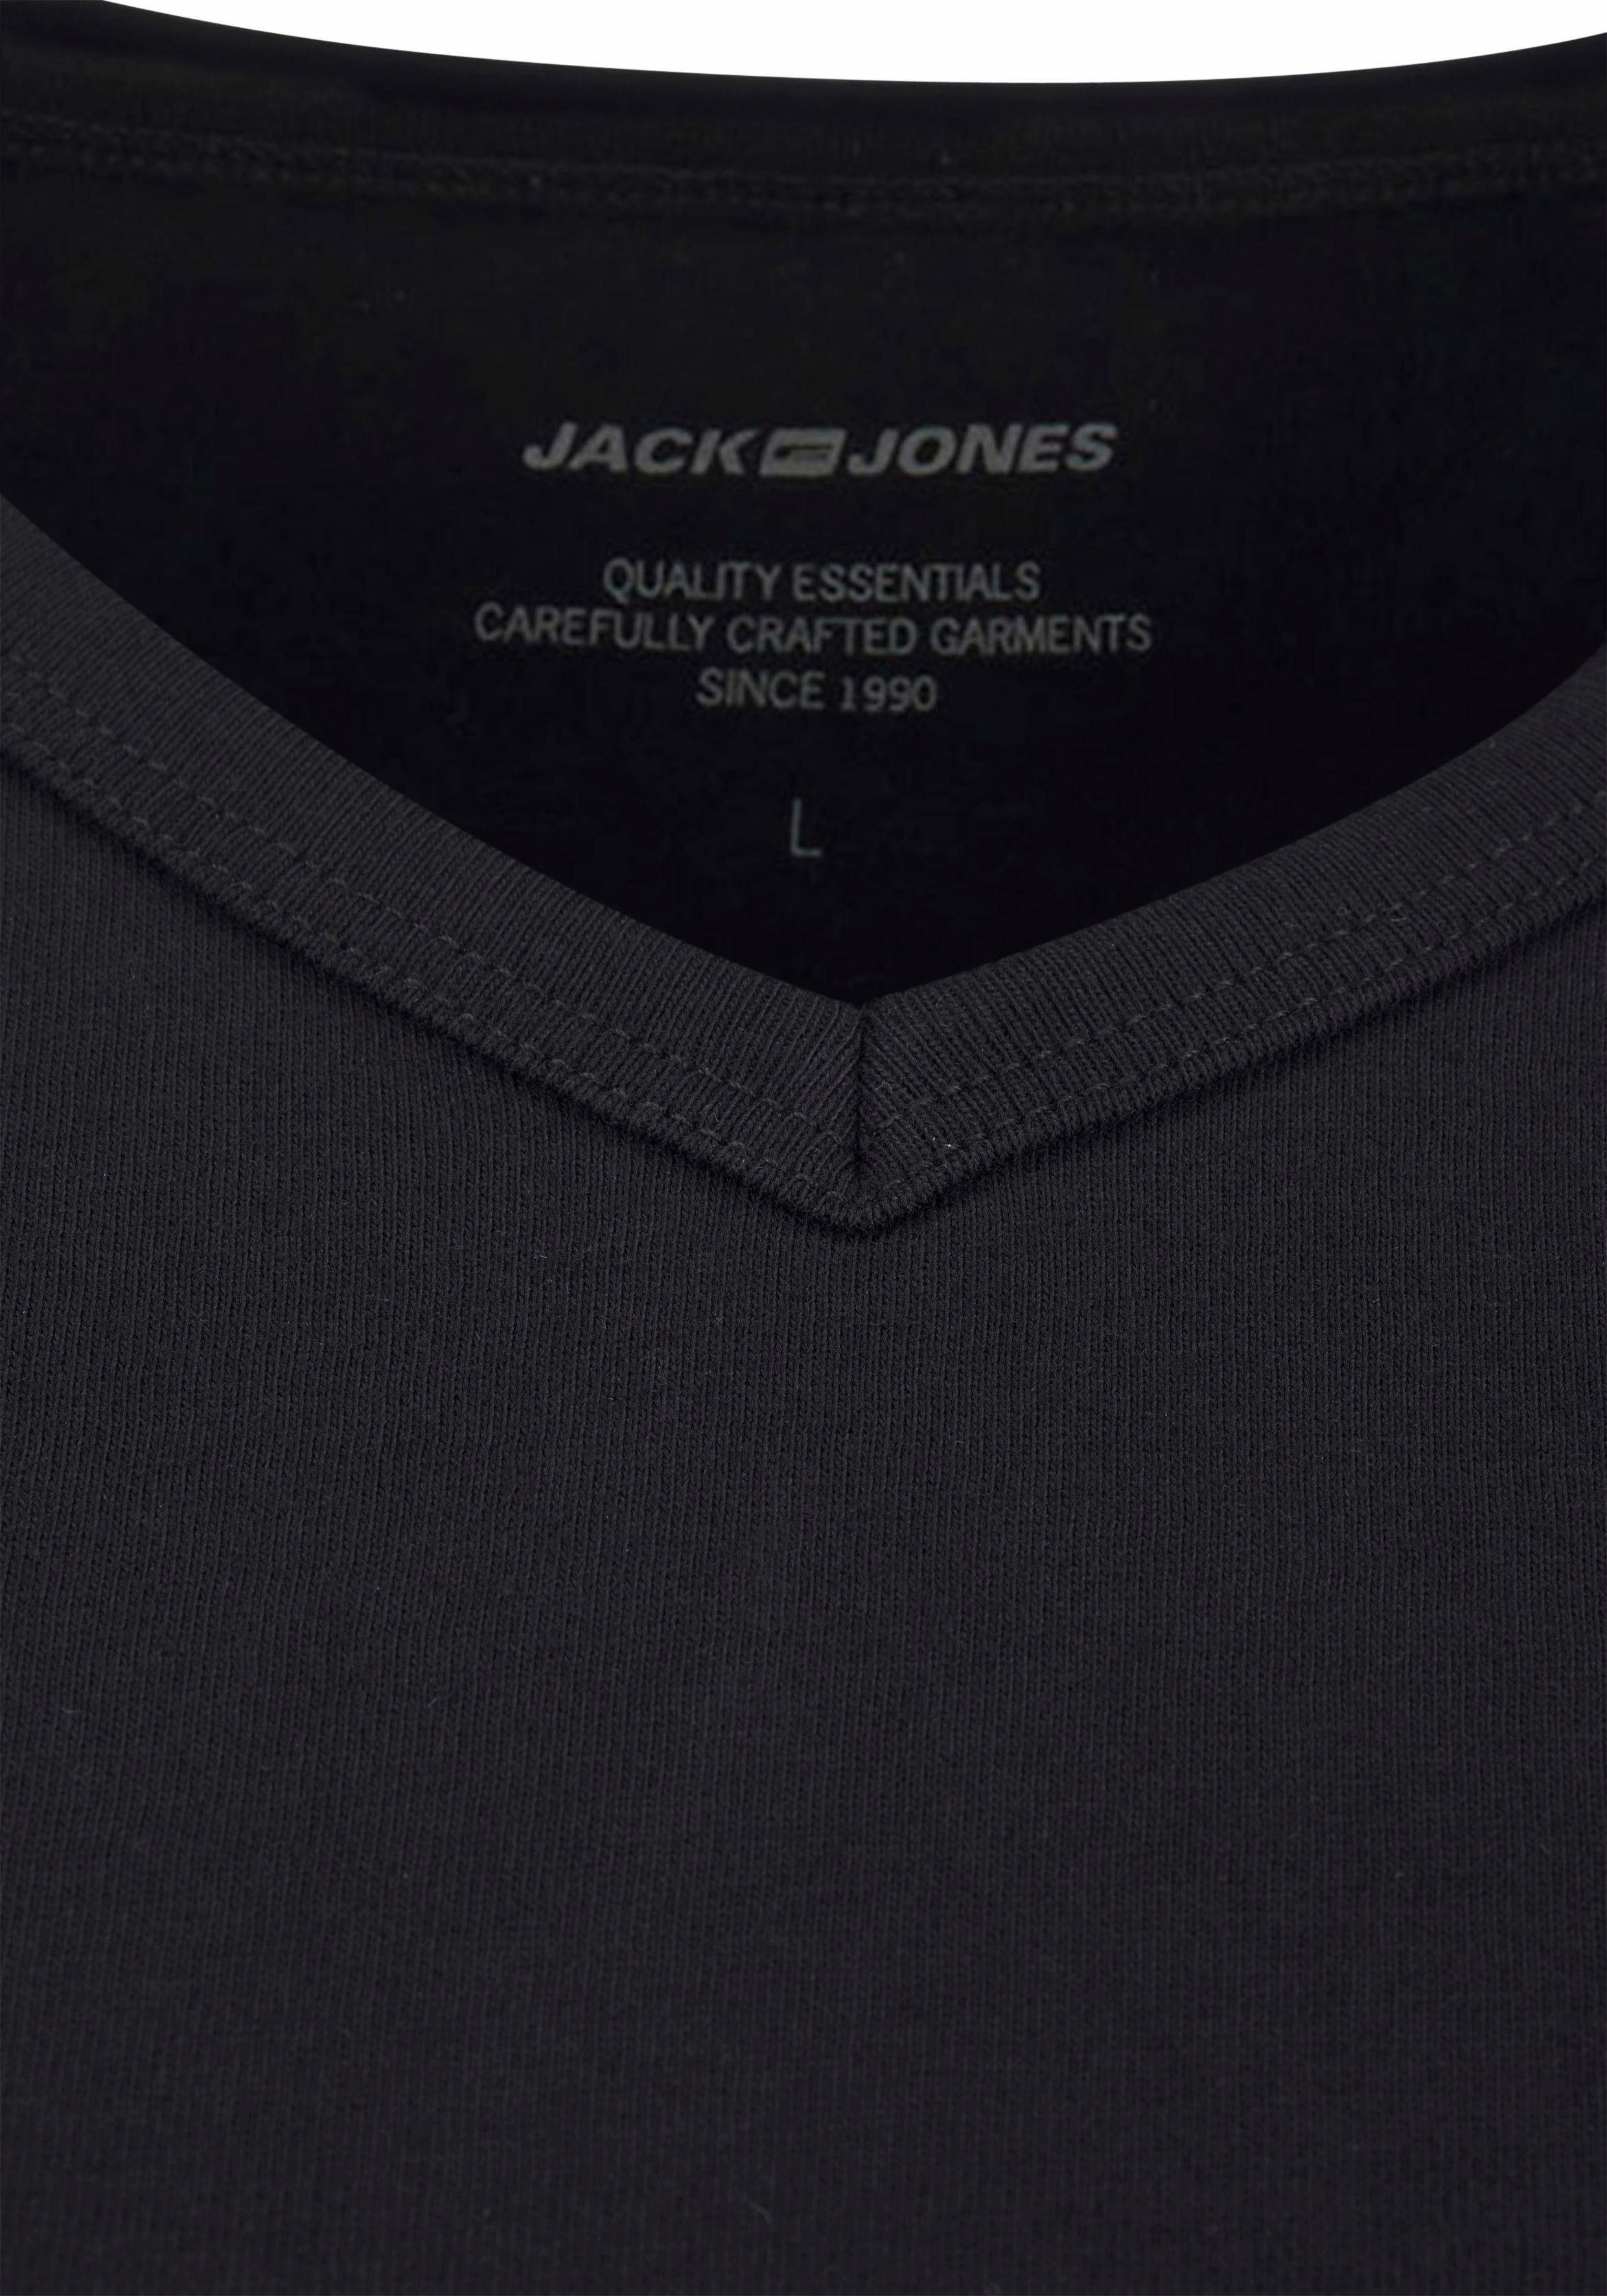 Jones & Jack schwarz T-Shirt (2er-Pack) V-Neck